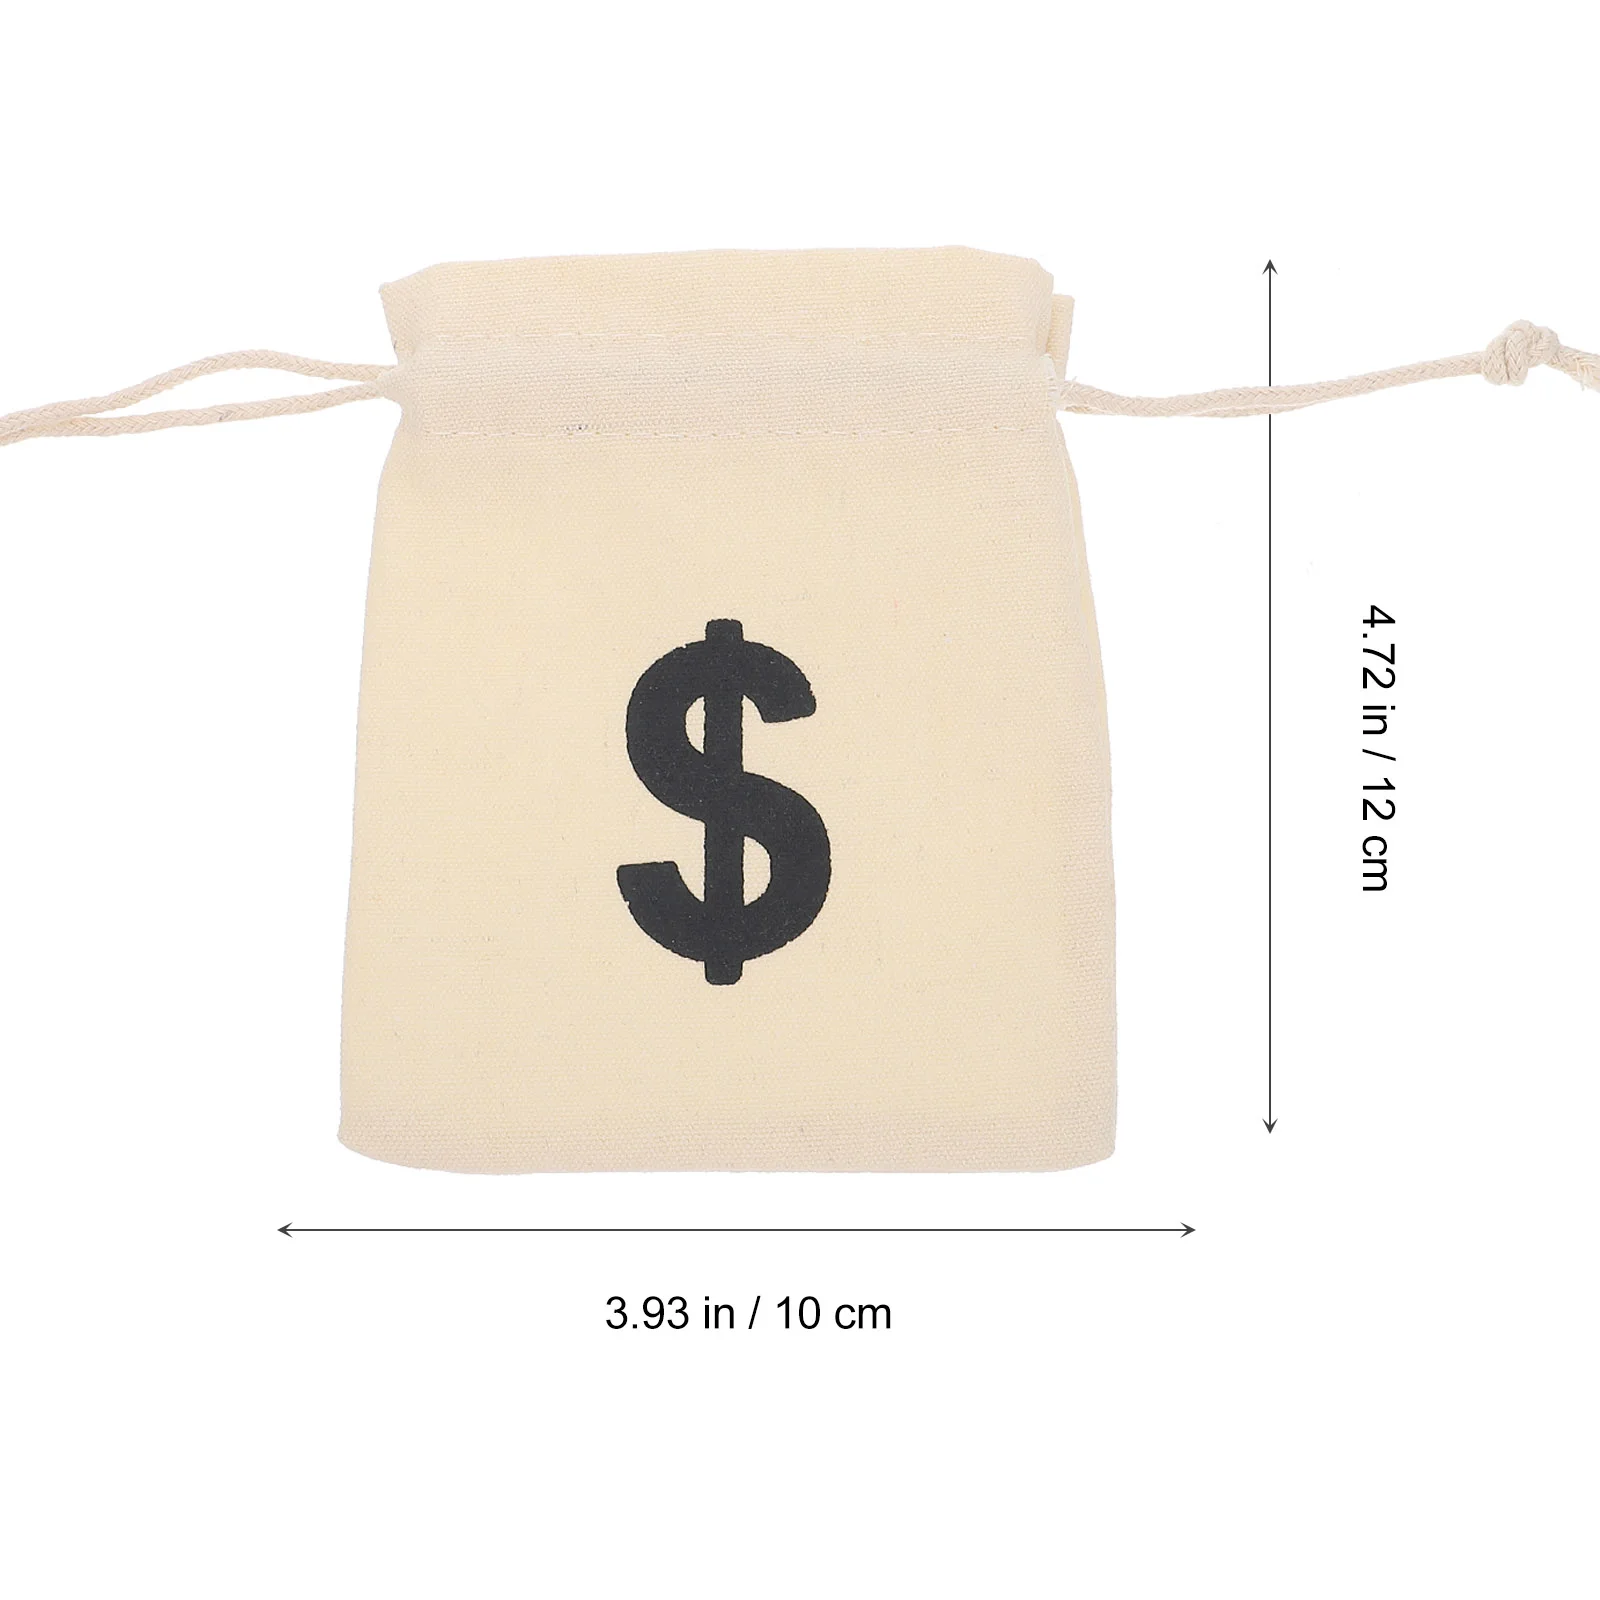 Checkers Purse Bag Full of Paper Money Hustler Symbol Money 